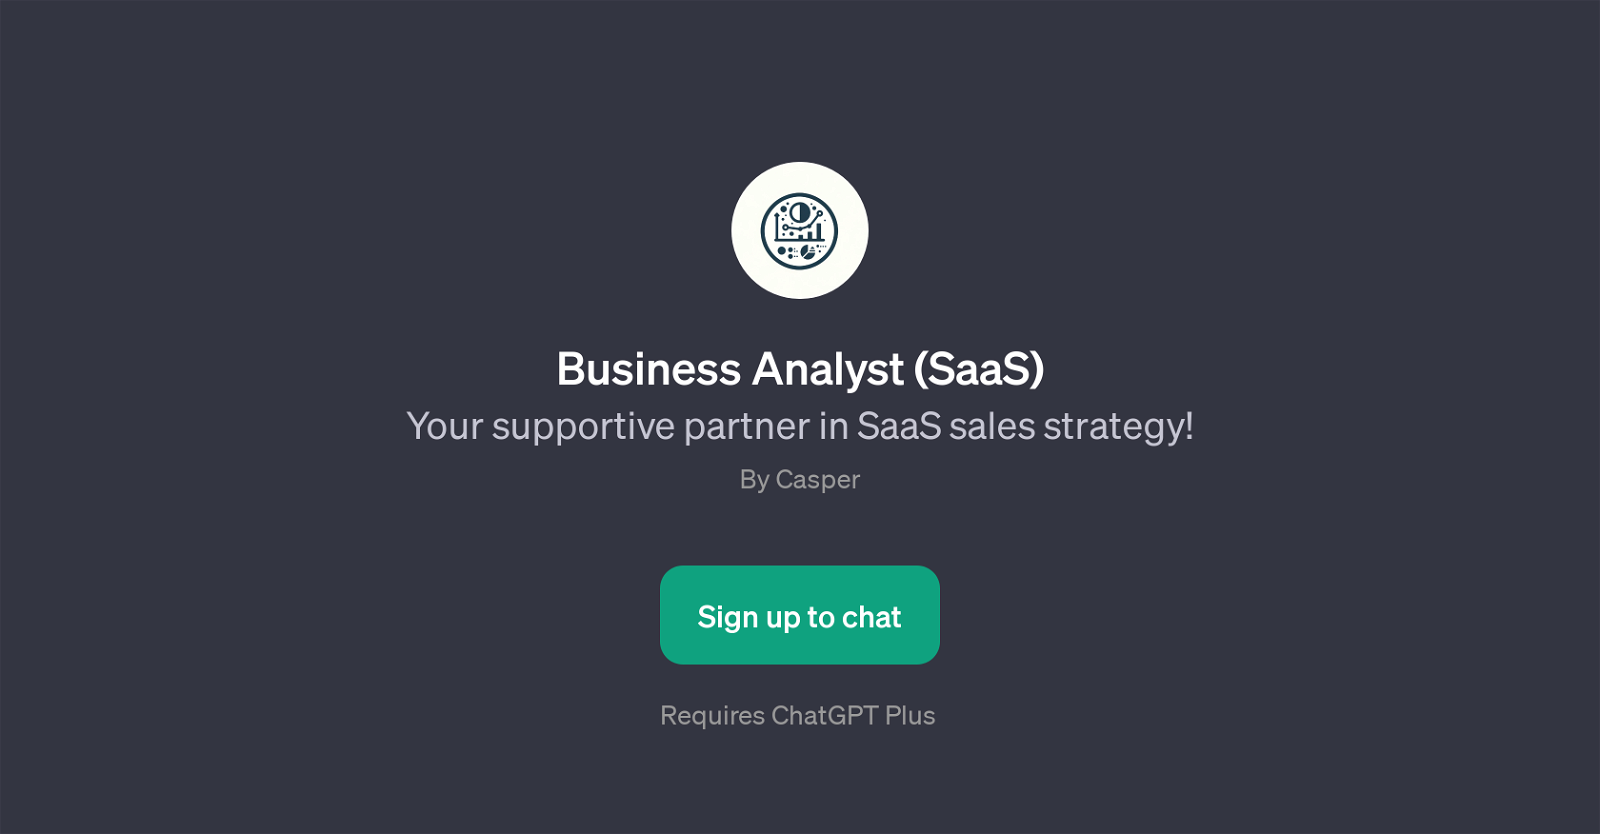 Business Analyst (SaaS) website